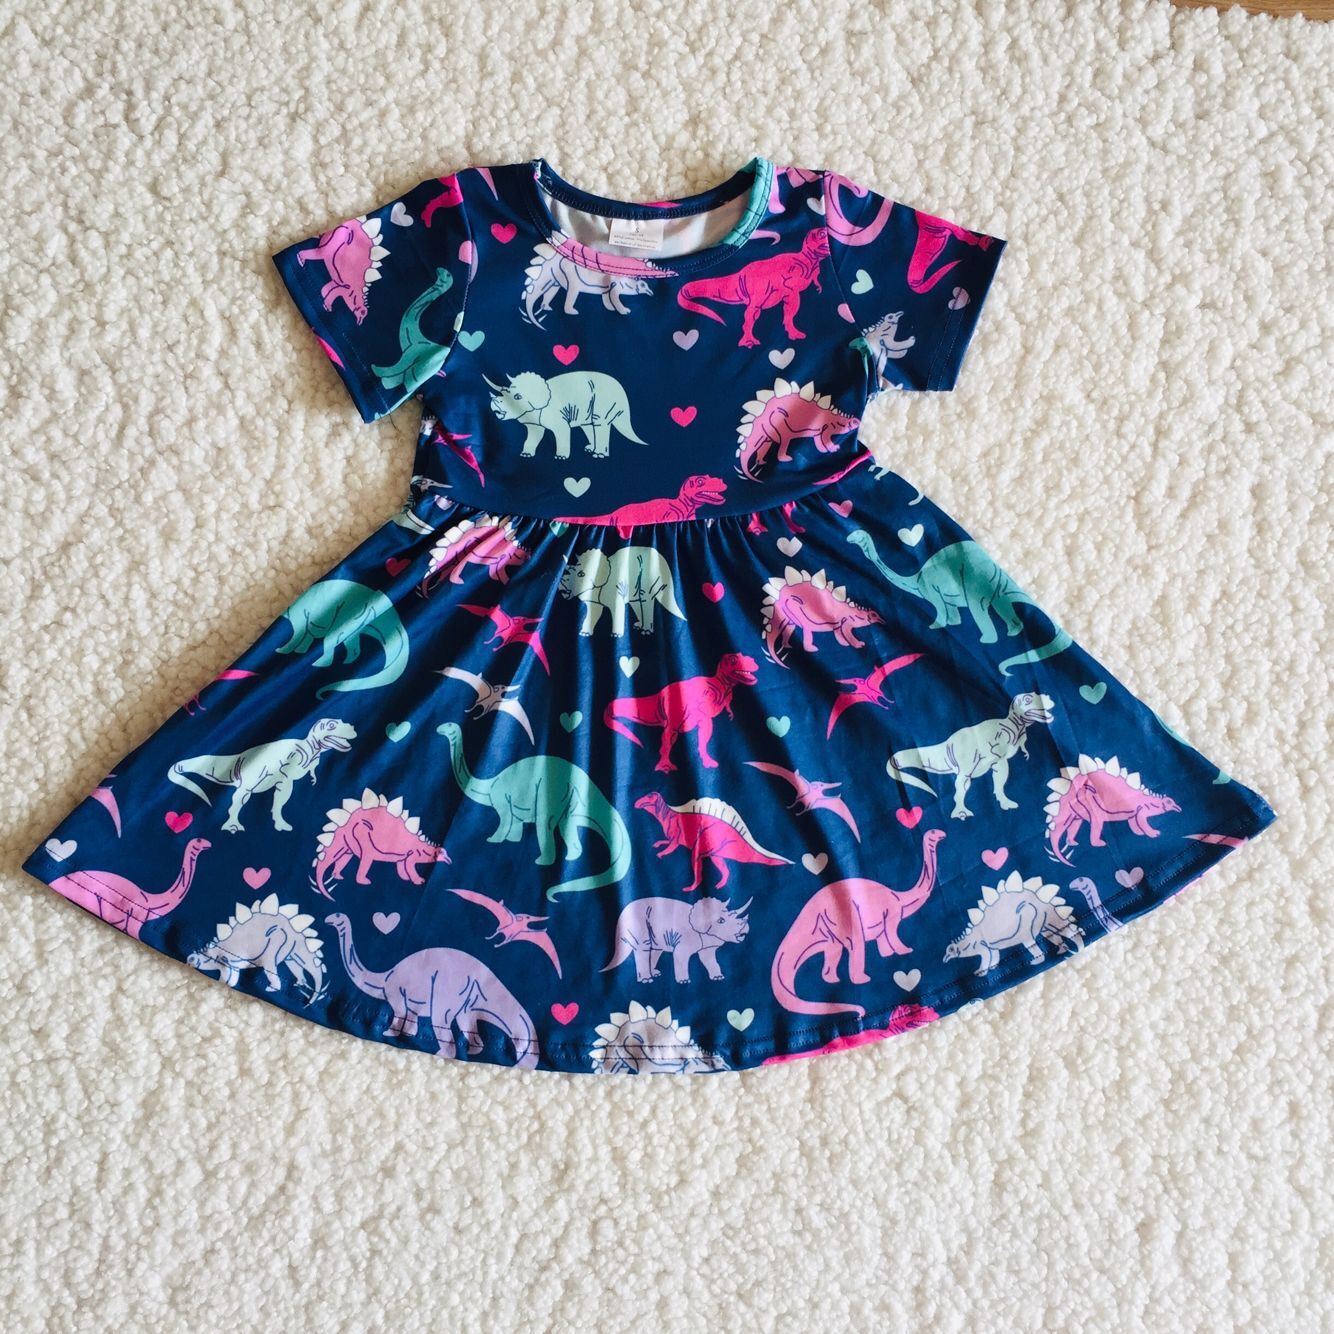 A0-12 baby Valentine's Day clothing short sleeve dinosaur print kids dresses for girls milk silk